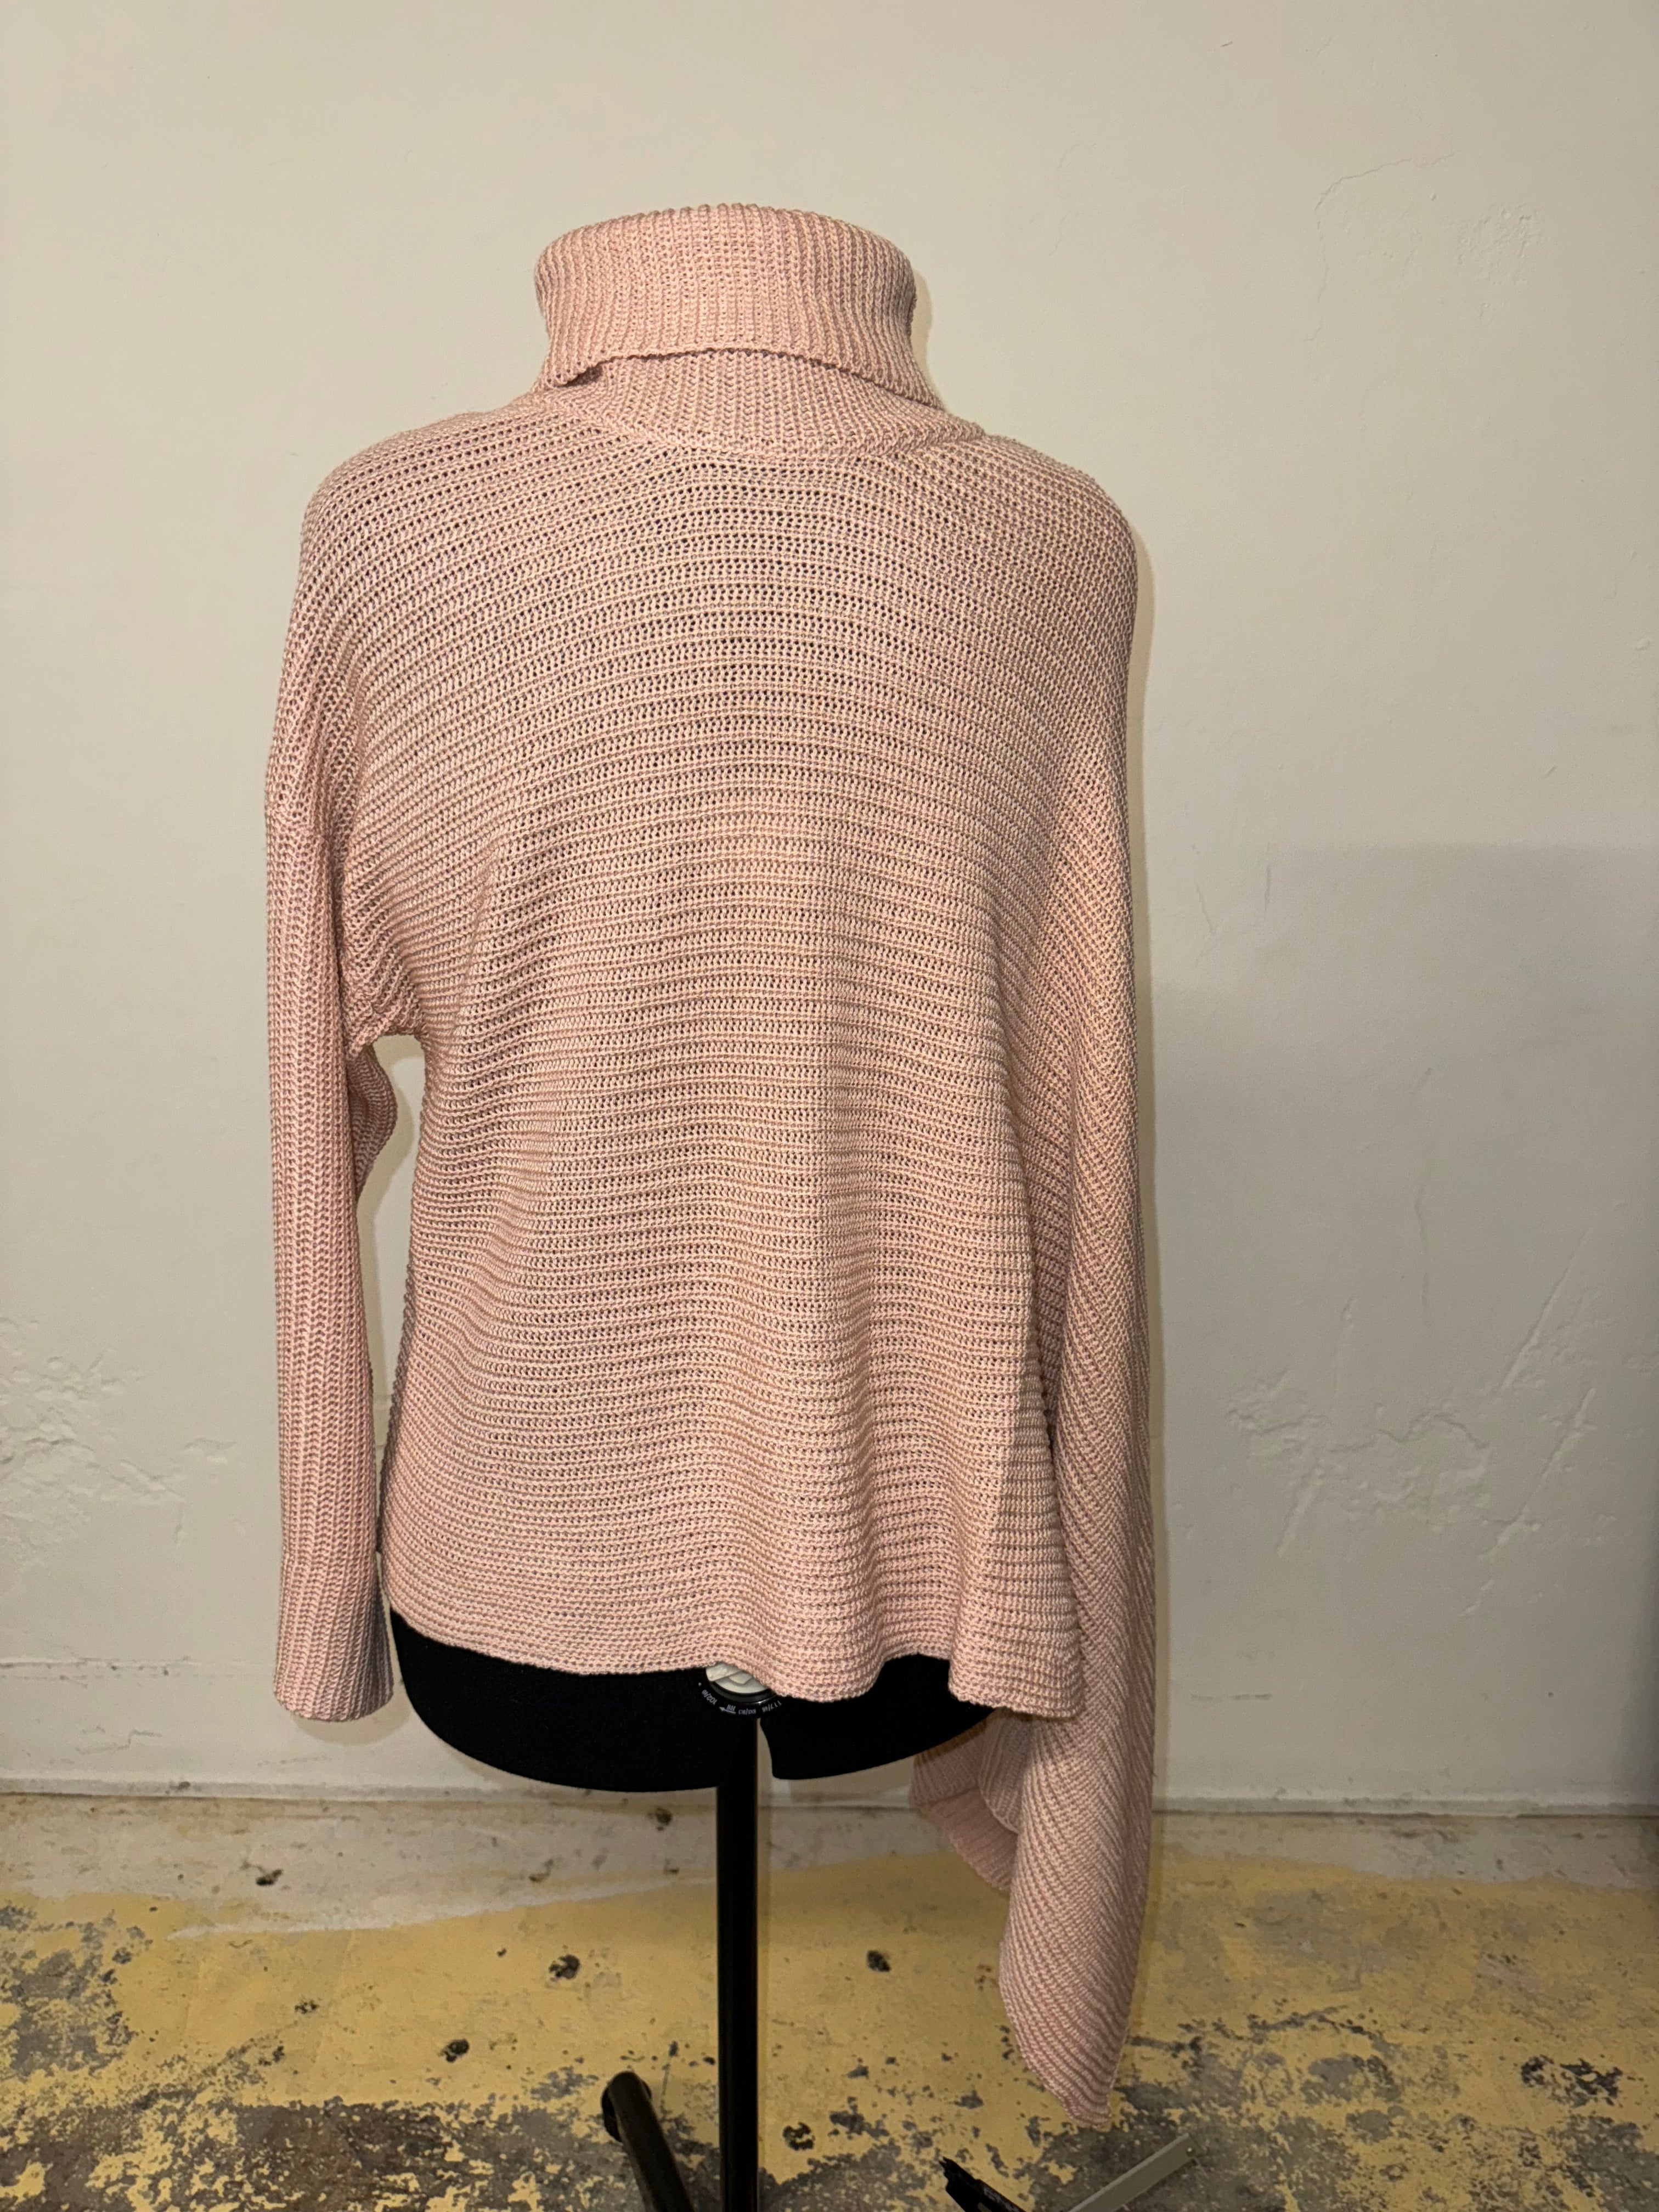 Asymmetrical One Sleeve Sweater Top FINAL SALE